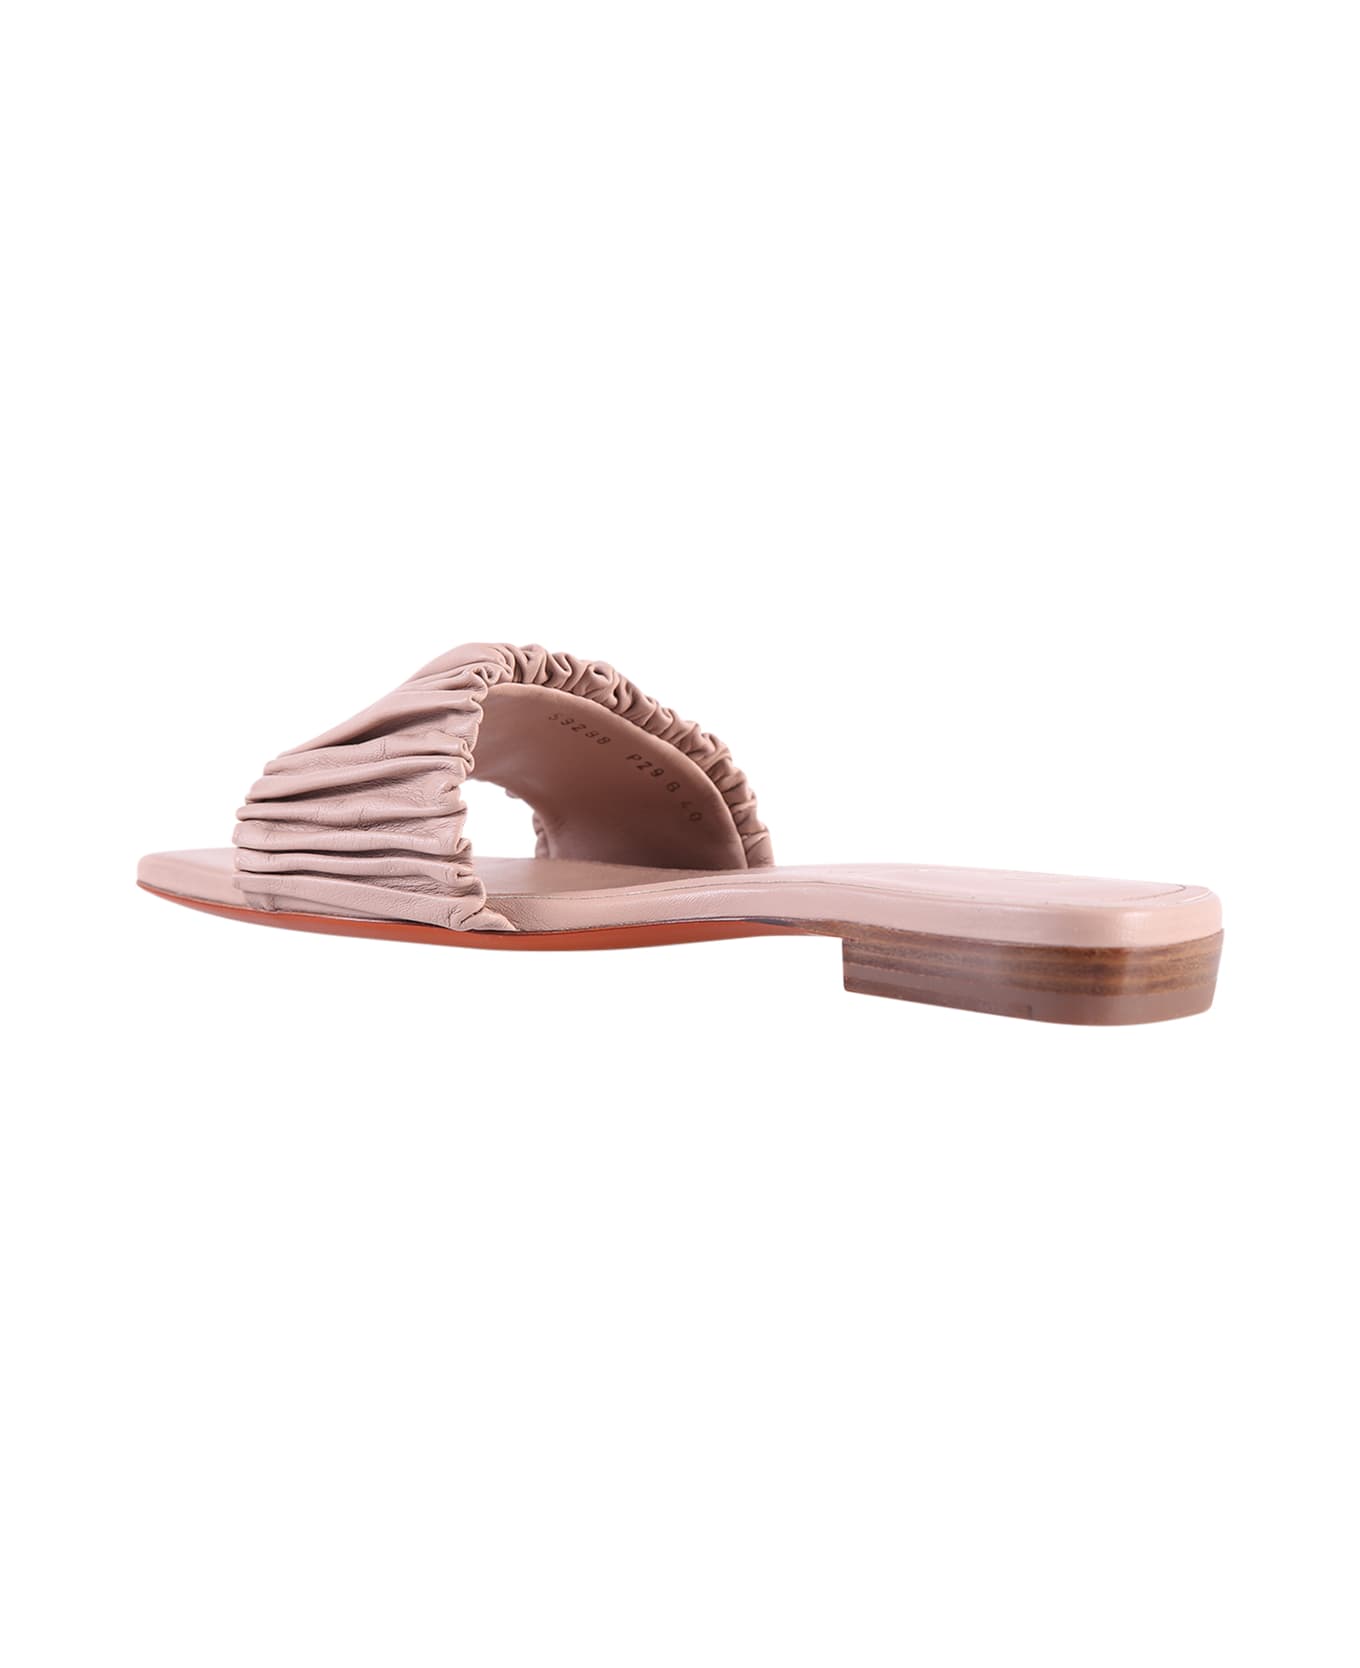 Santoni Fuxia Sandals - Pink サンダル